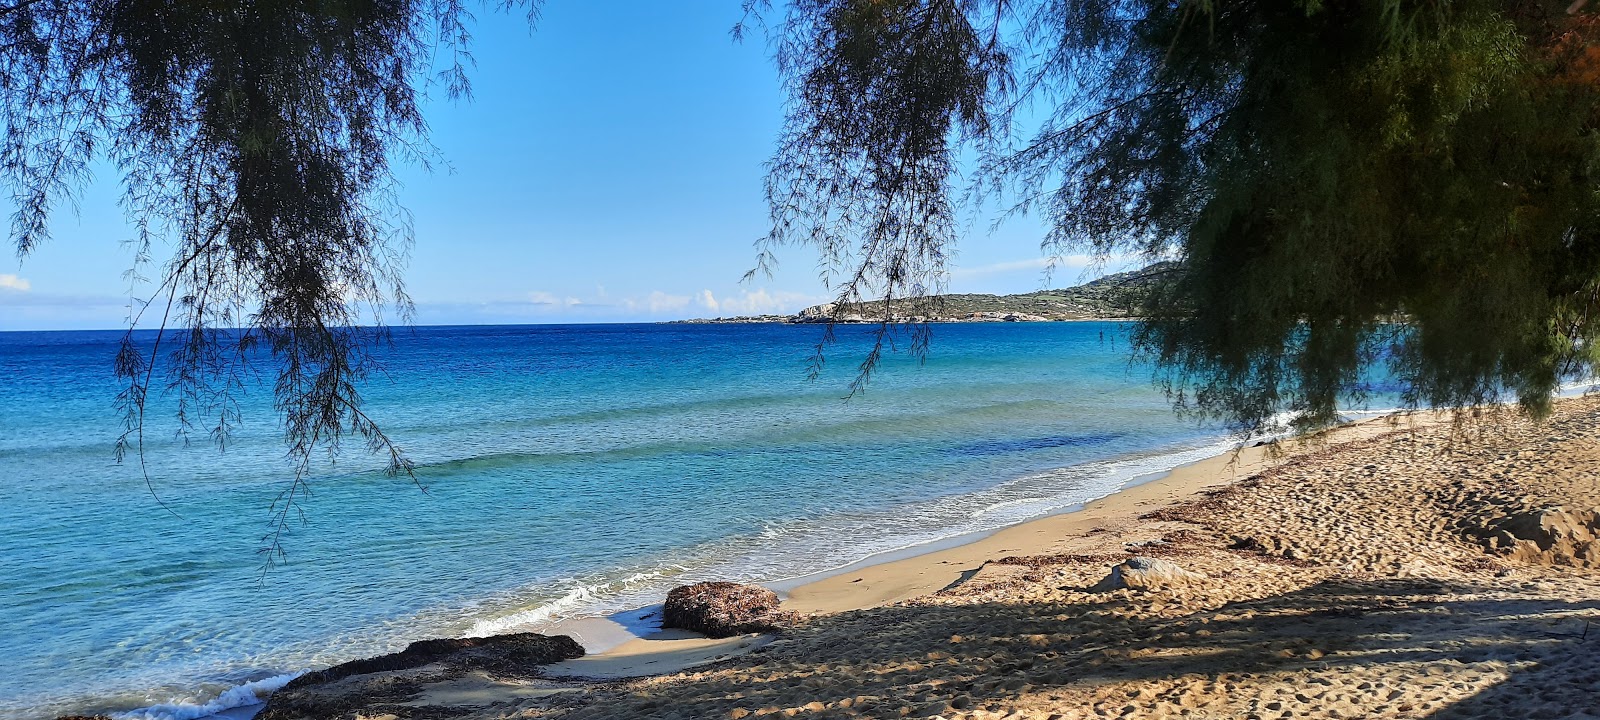 Foto de Praia de Aregno - lugar popular entre os apreciadores de relaxamento